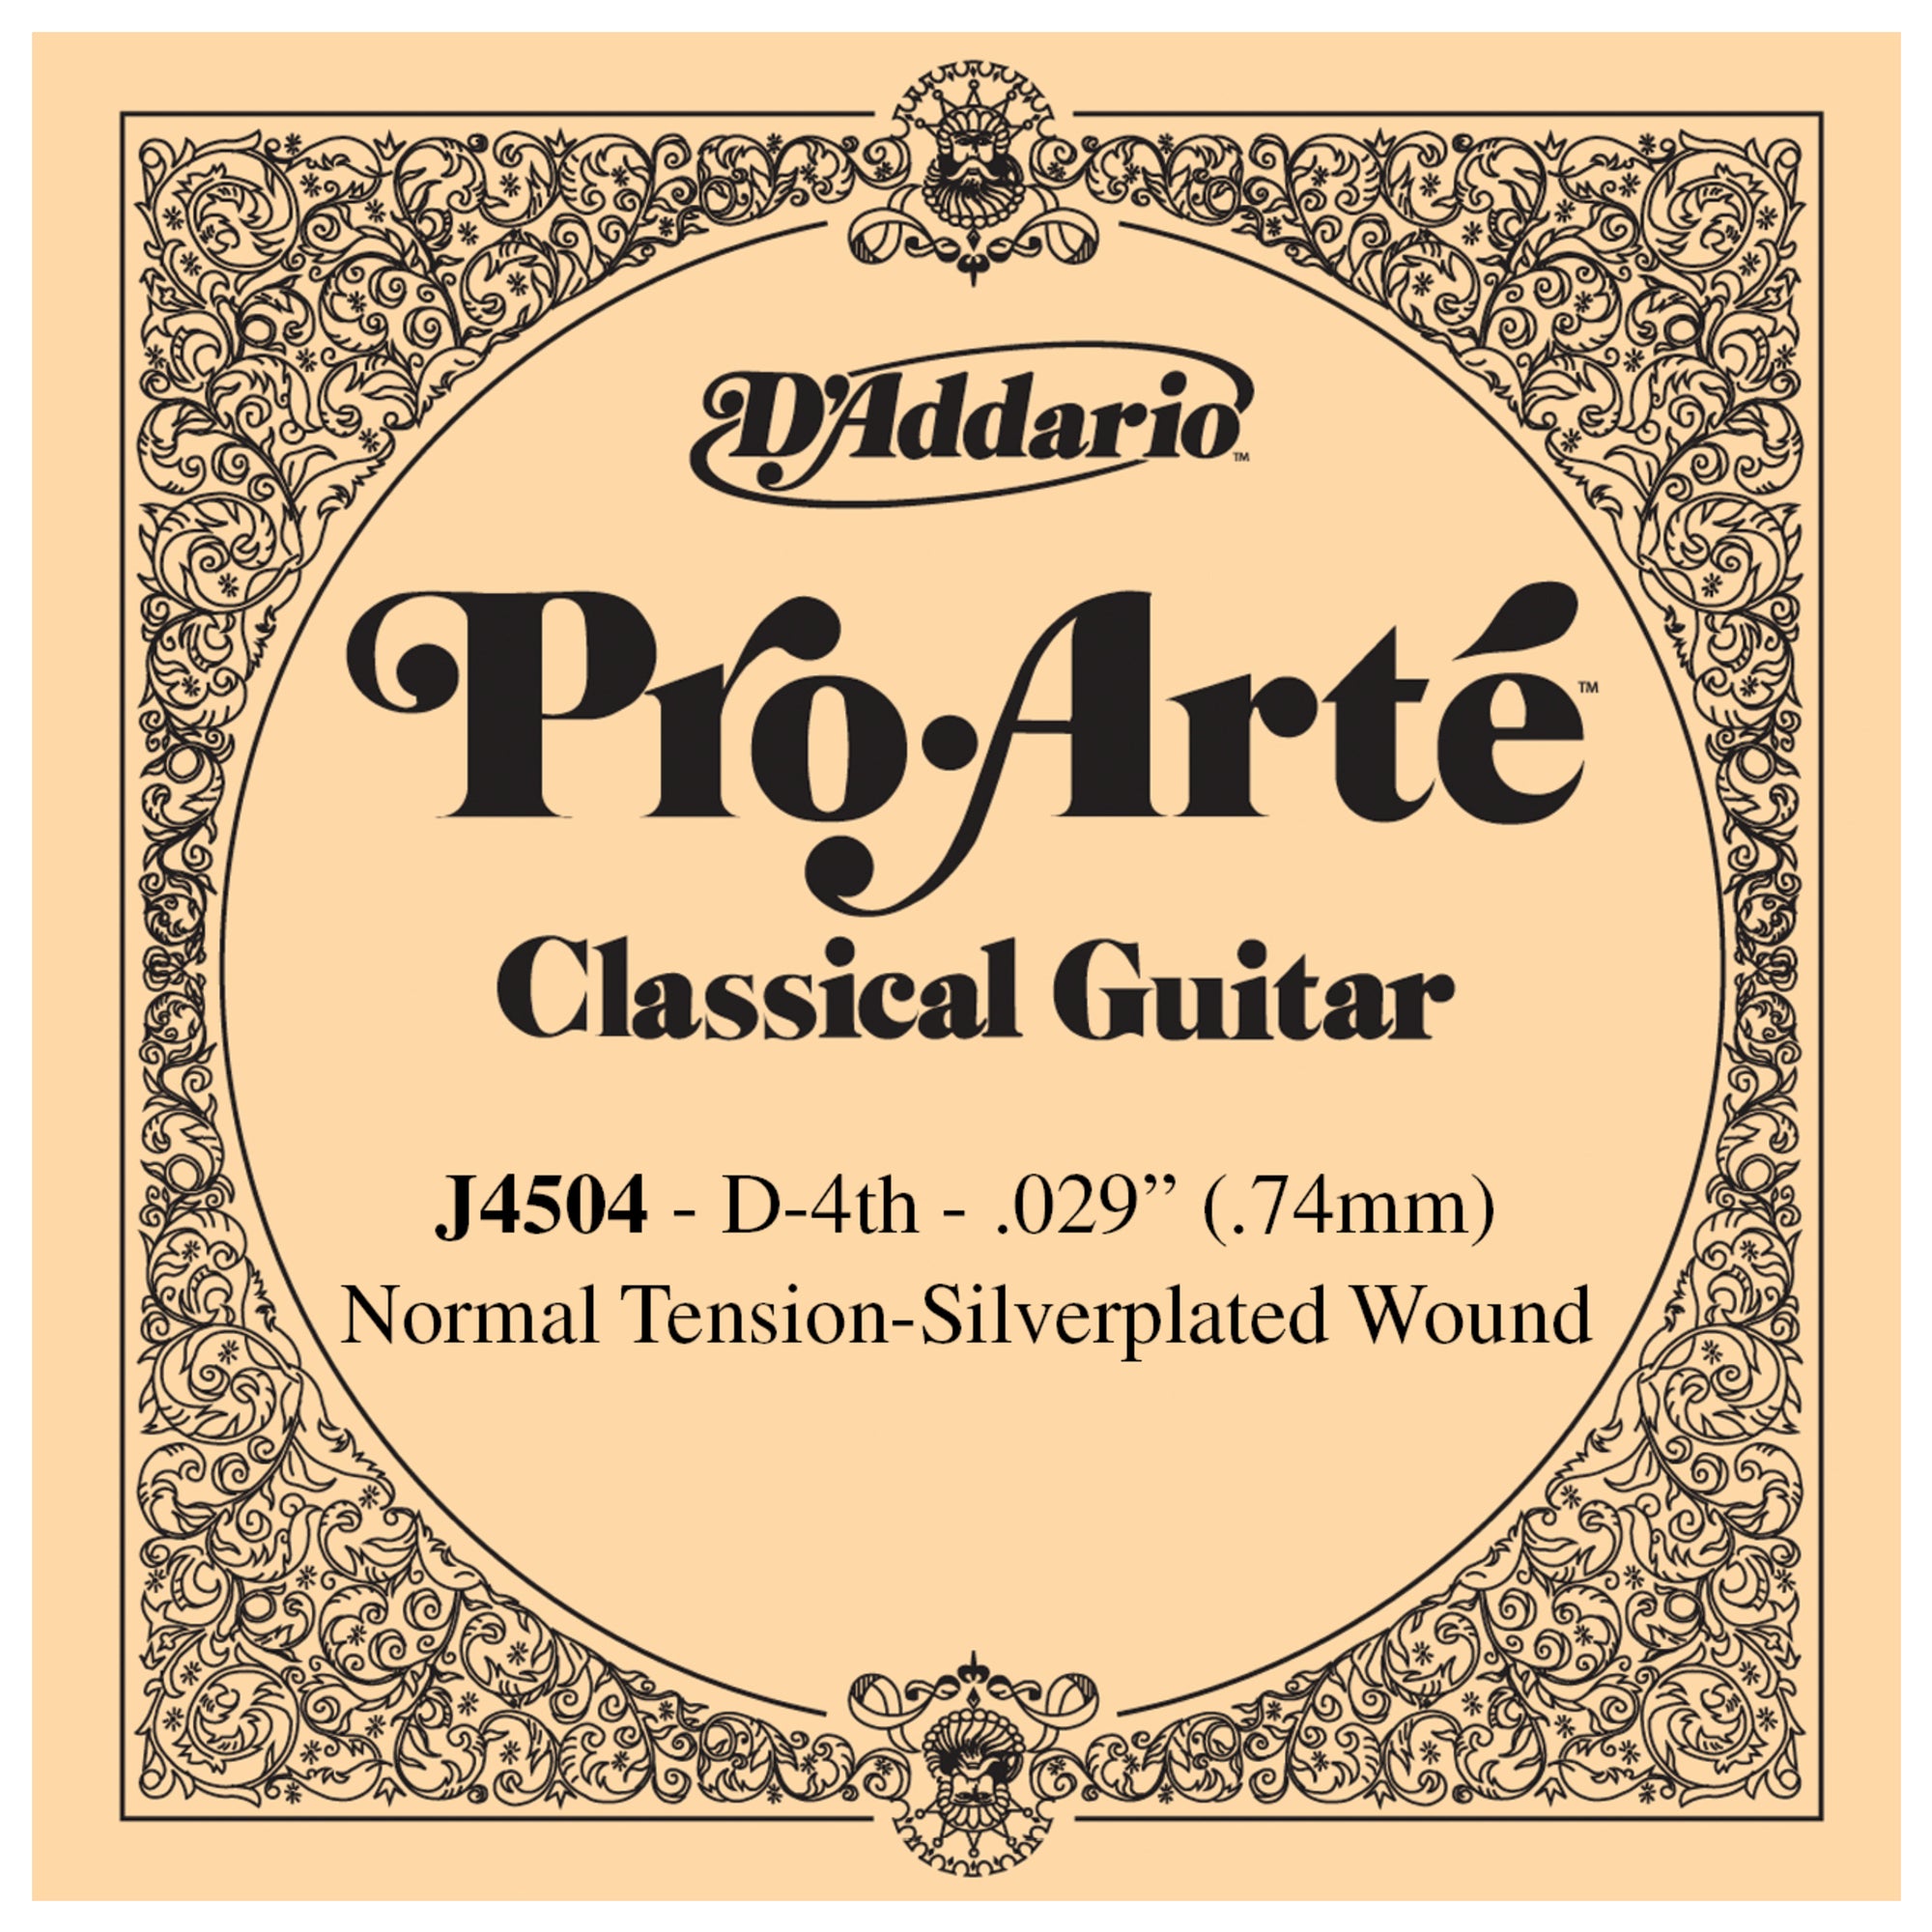 D'Addario J4504 Pro Arte 4th Silver Wound Single Guitar String .029 J4504